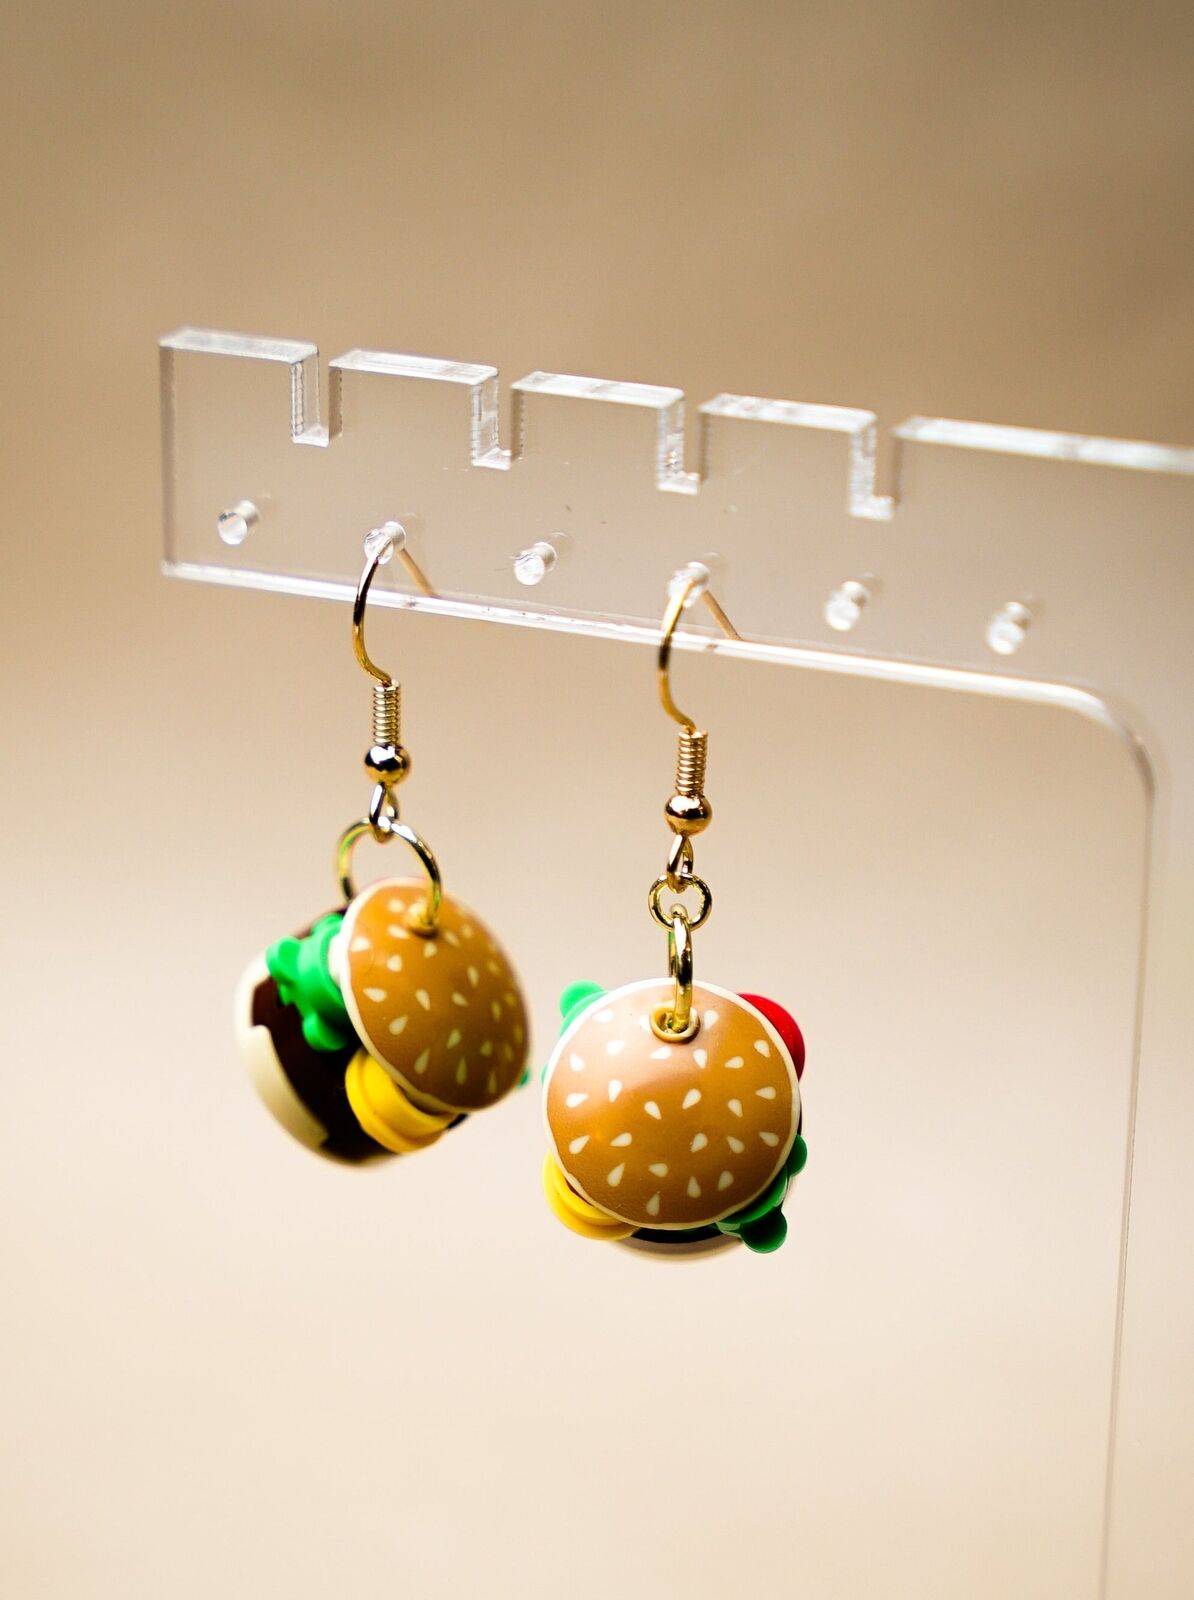 Hamburger Earrings Handmade from LEGO Elements